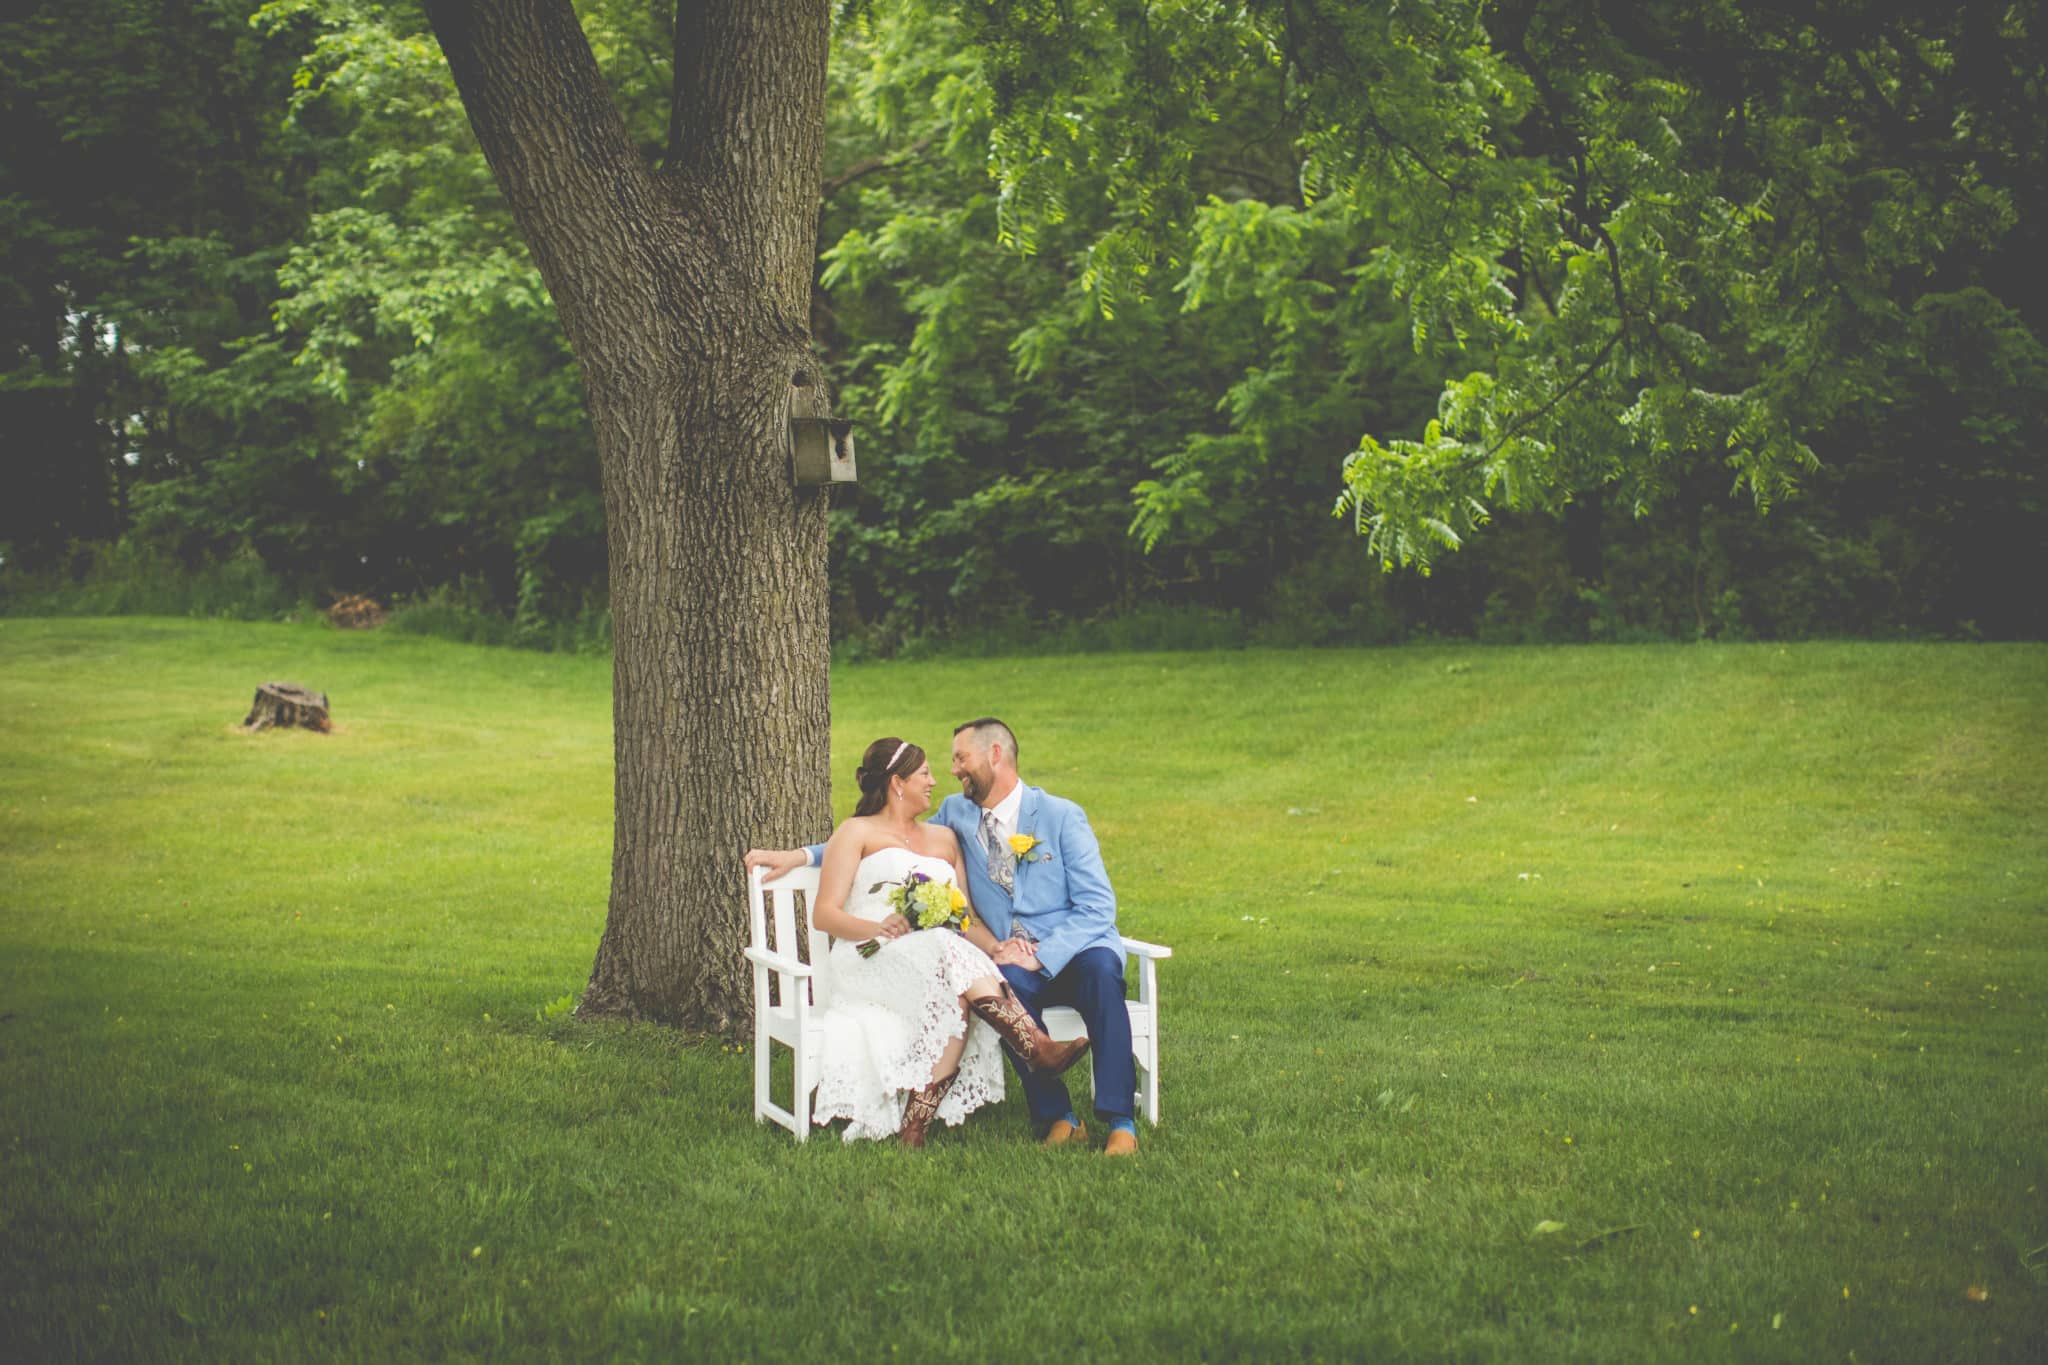 Wedding couple on lawn